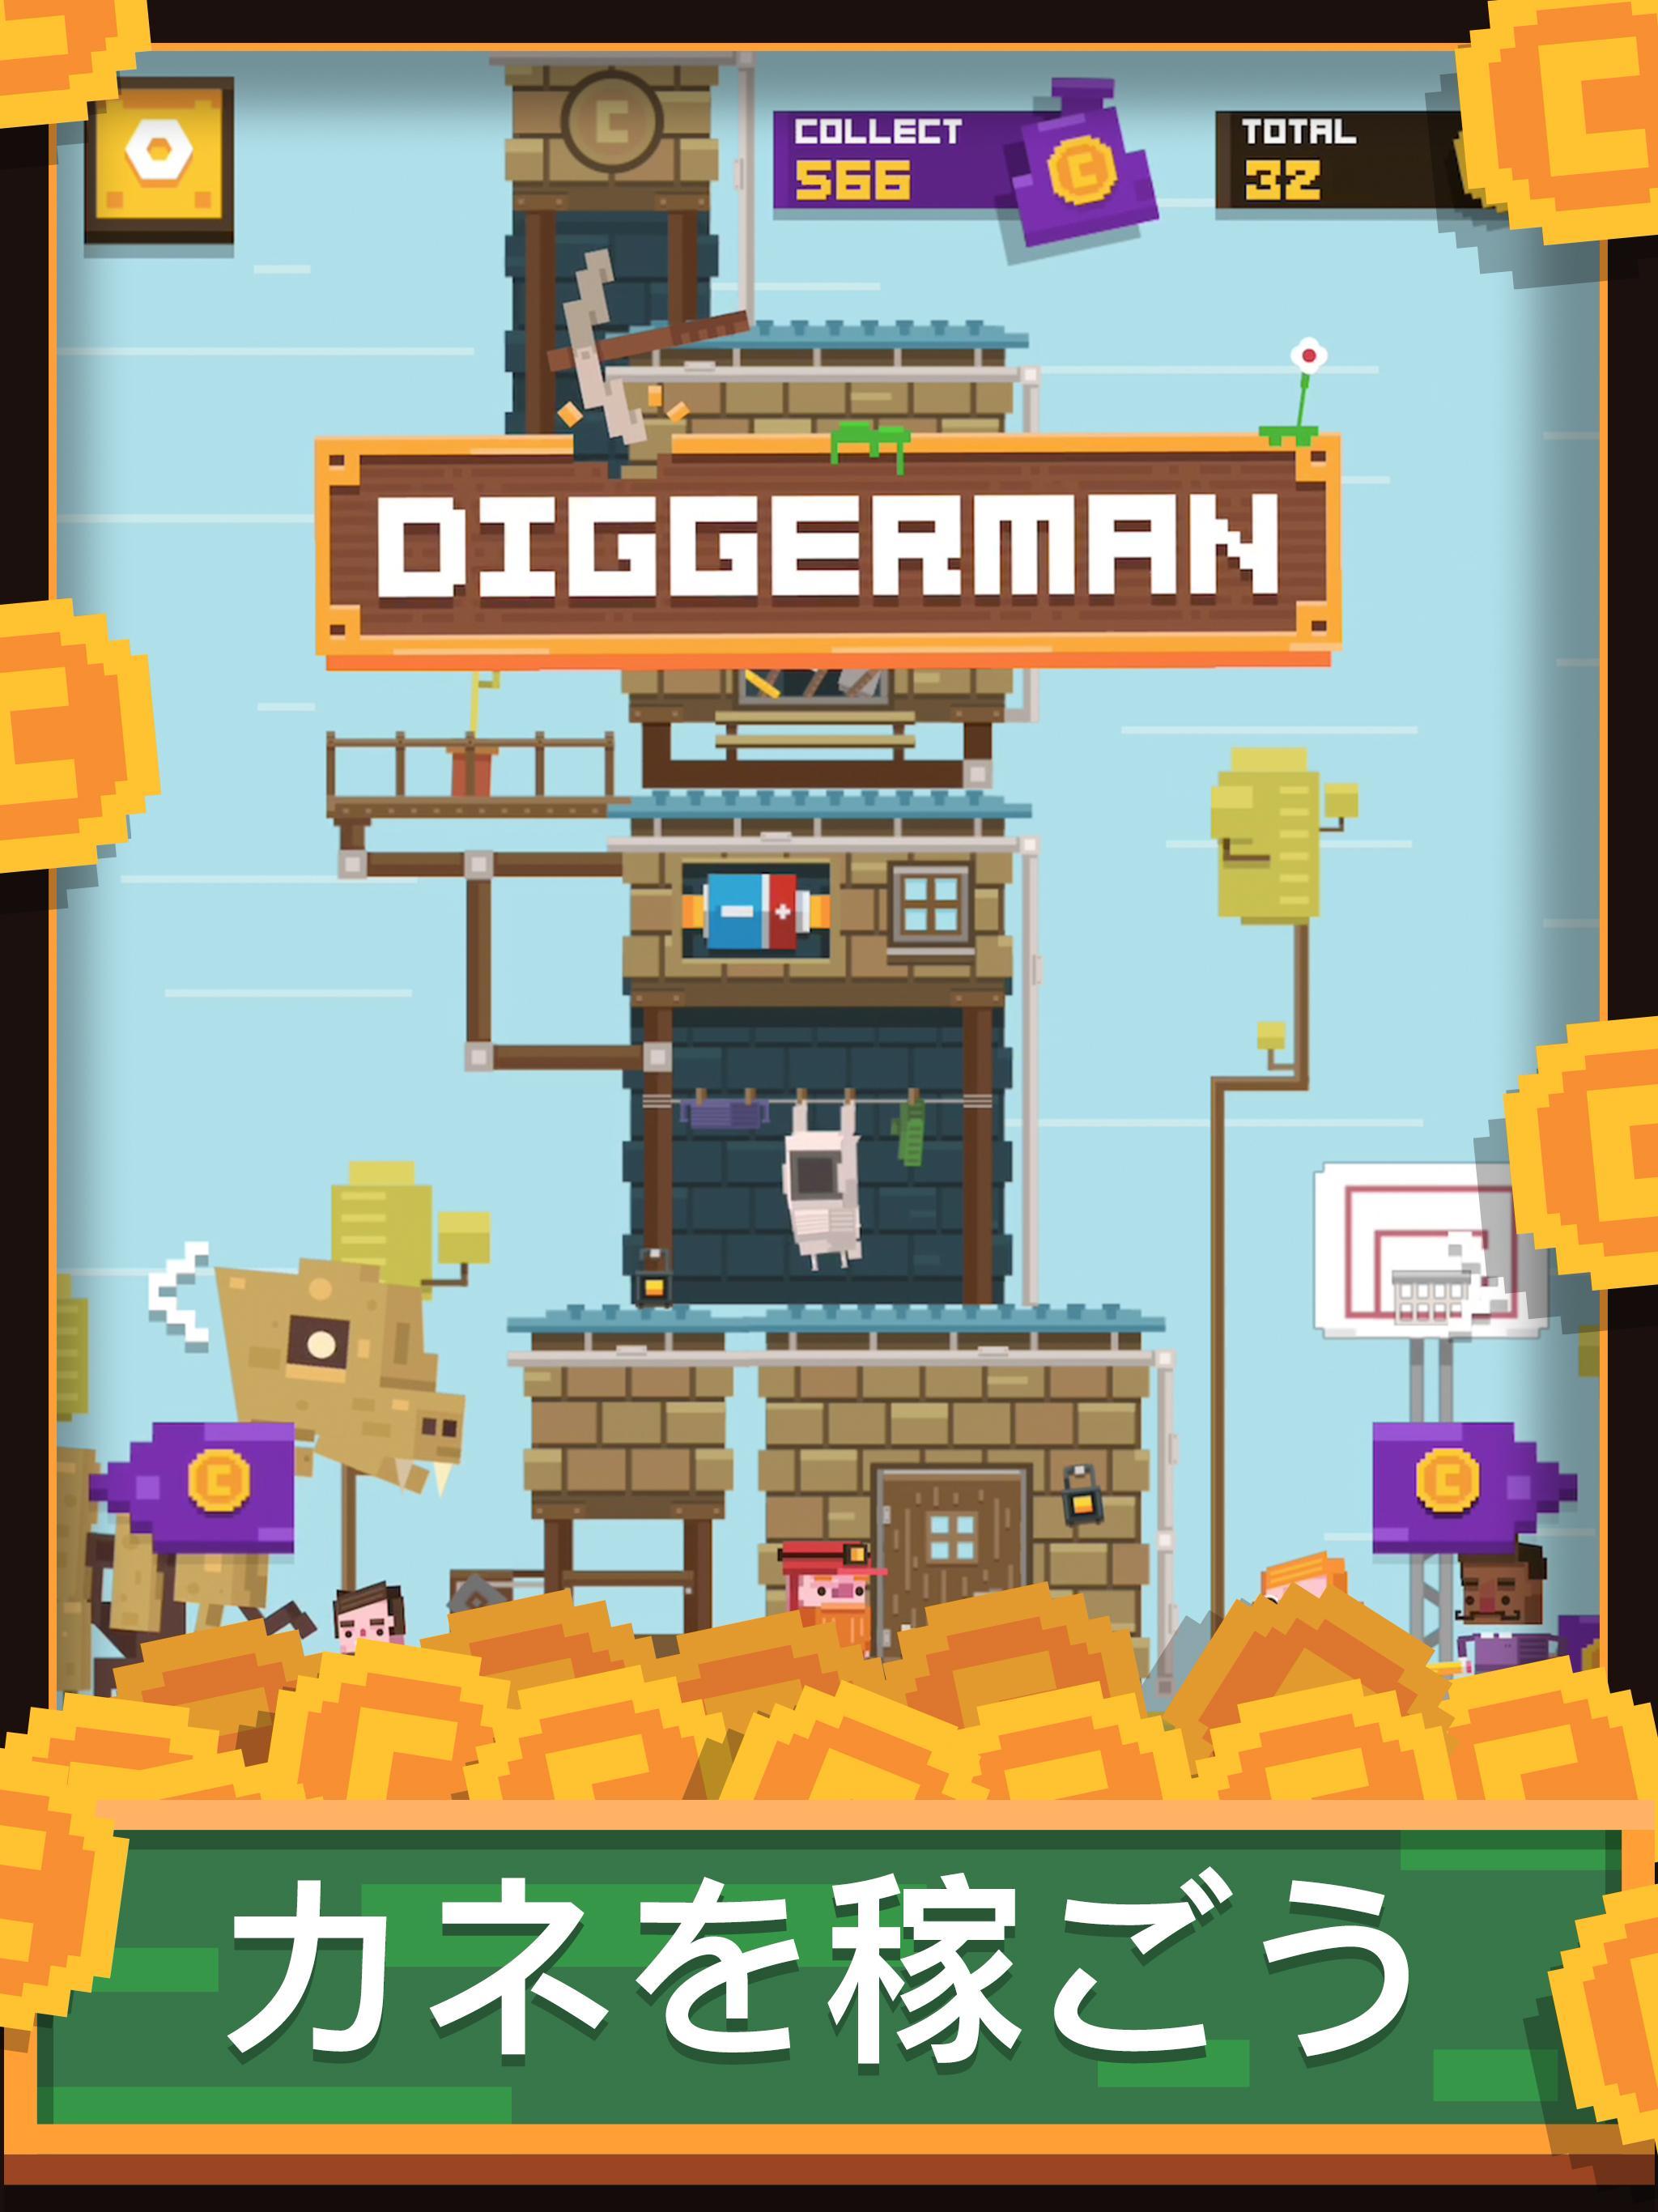 Diggerman - アクション・マイニング・シミュレータのキャプチャ